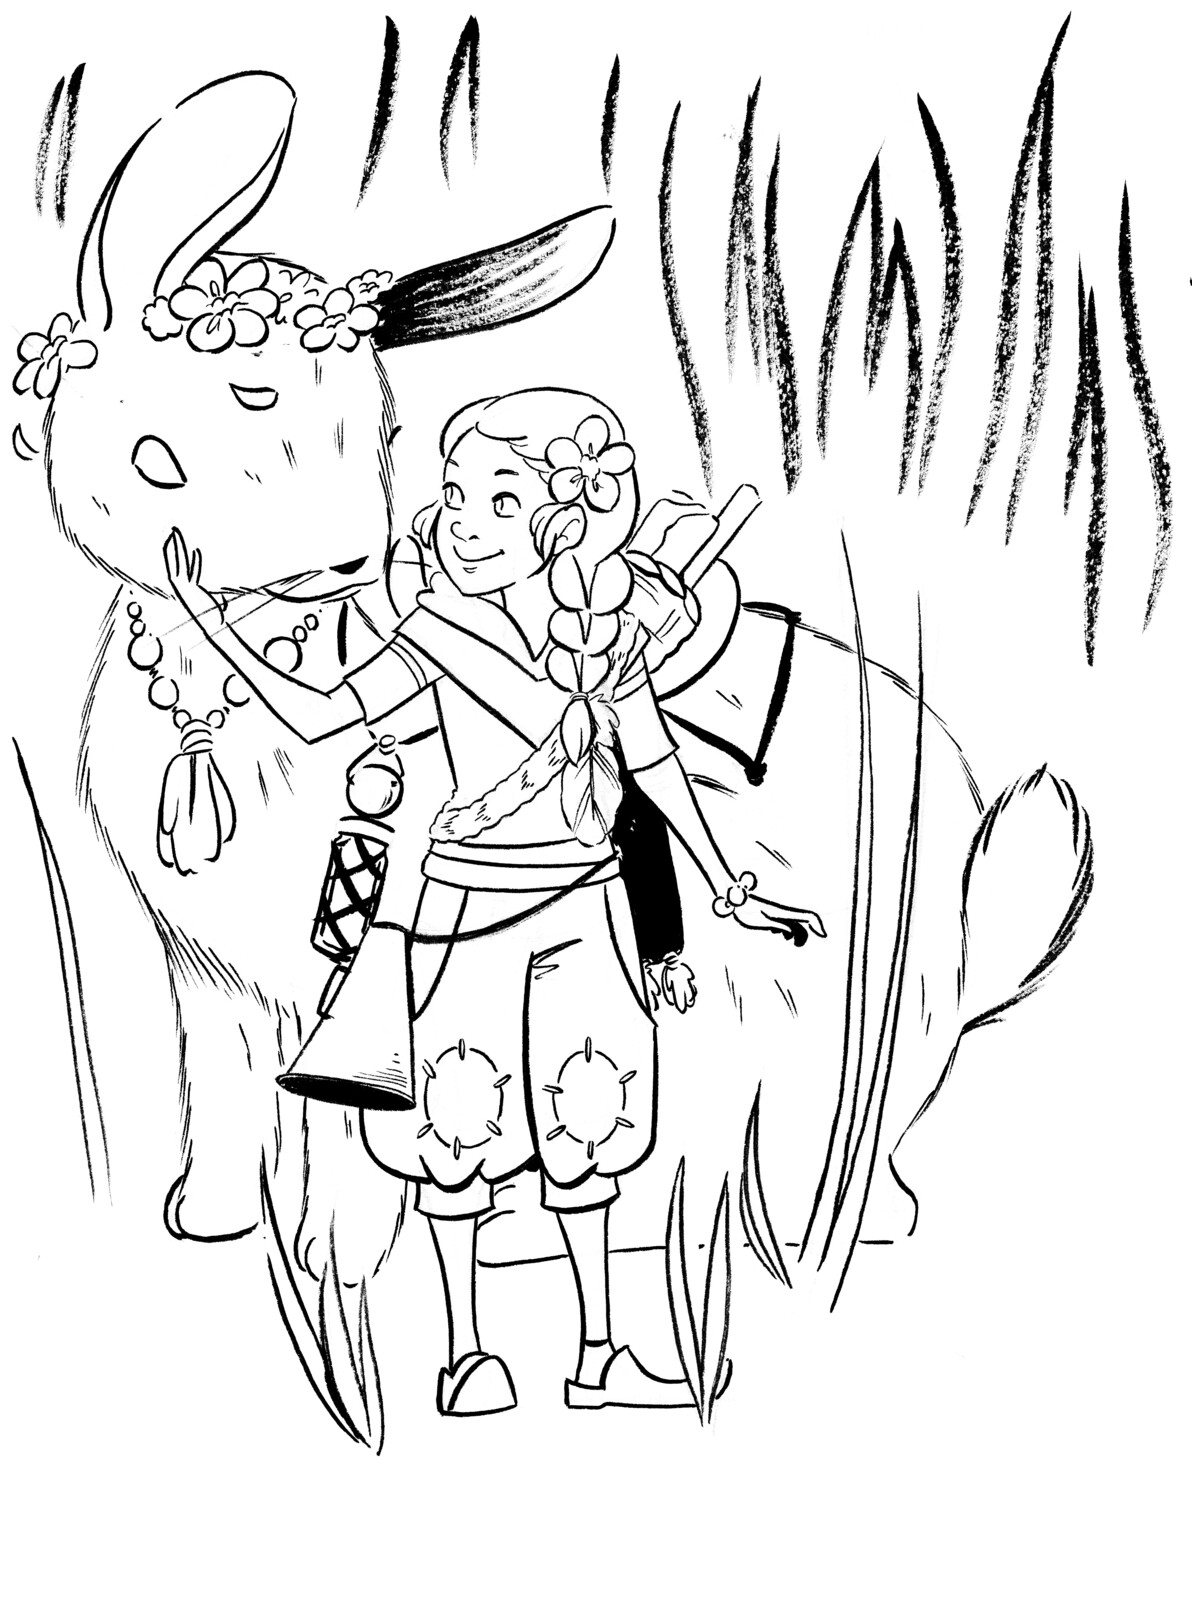 2017 Inktober illustration of a Lilliputian Messenger and her rabbit mount.